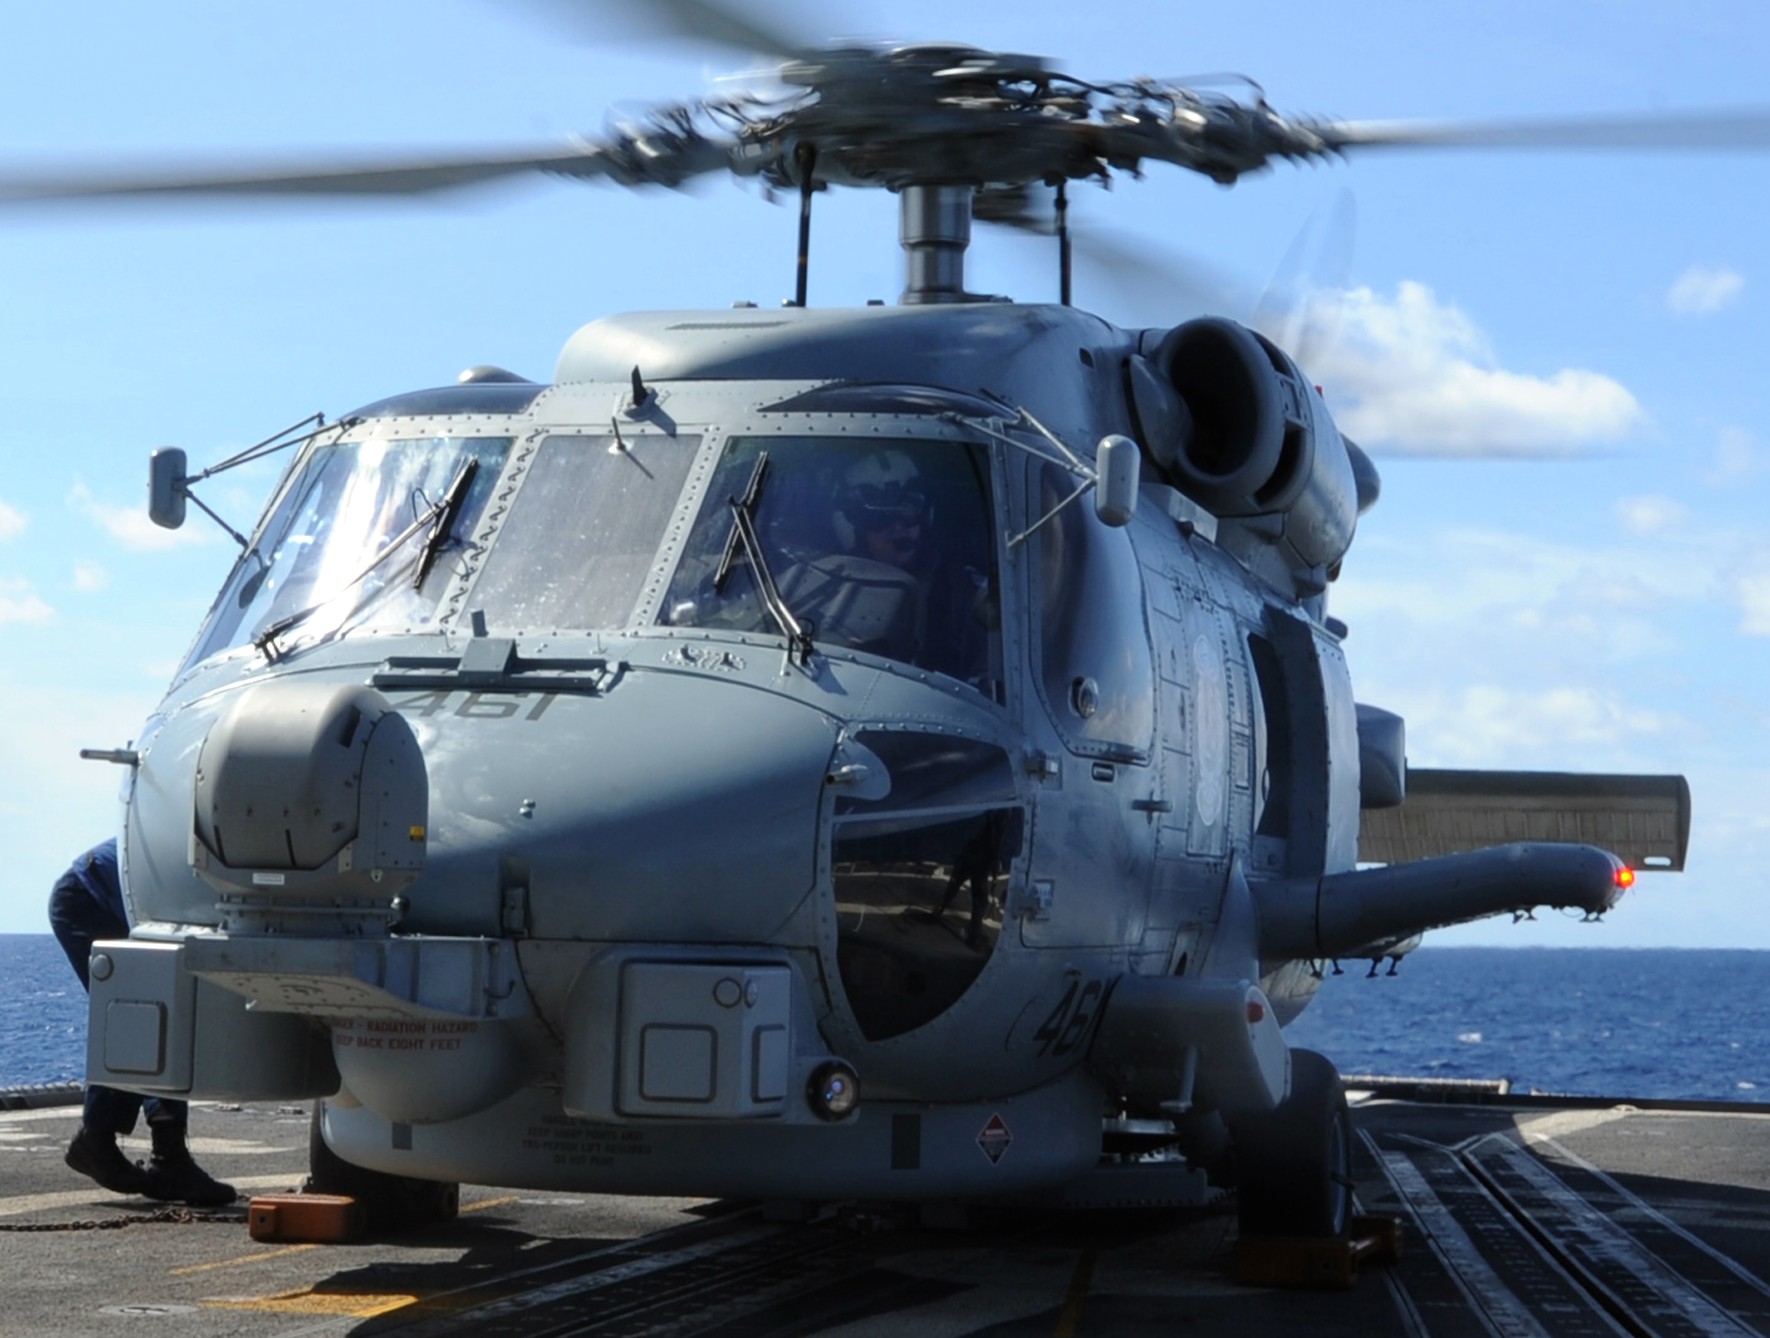 hsm-46 grandmasters helicopter maritime strike squadron mh-60r seahawk 2012 29 uss gettysburg cg-64